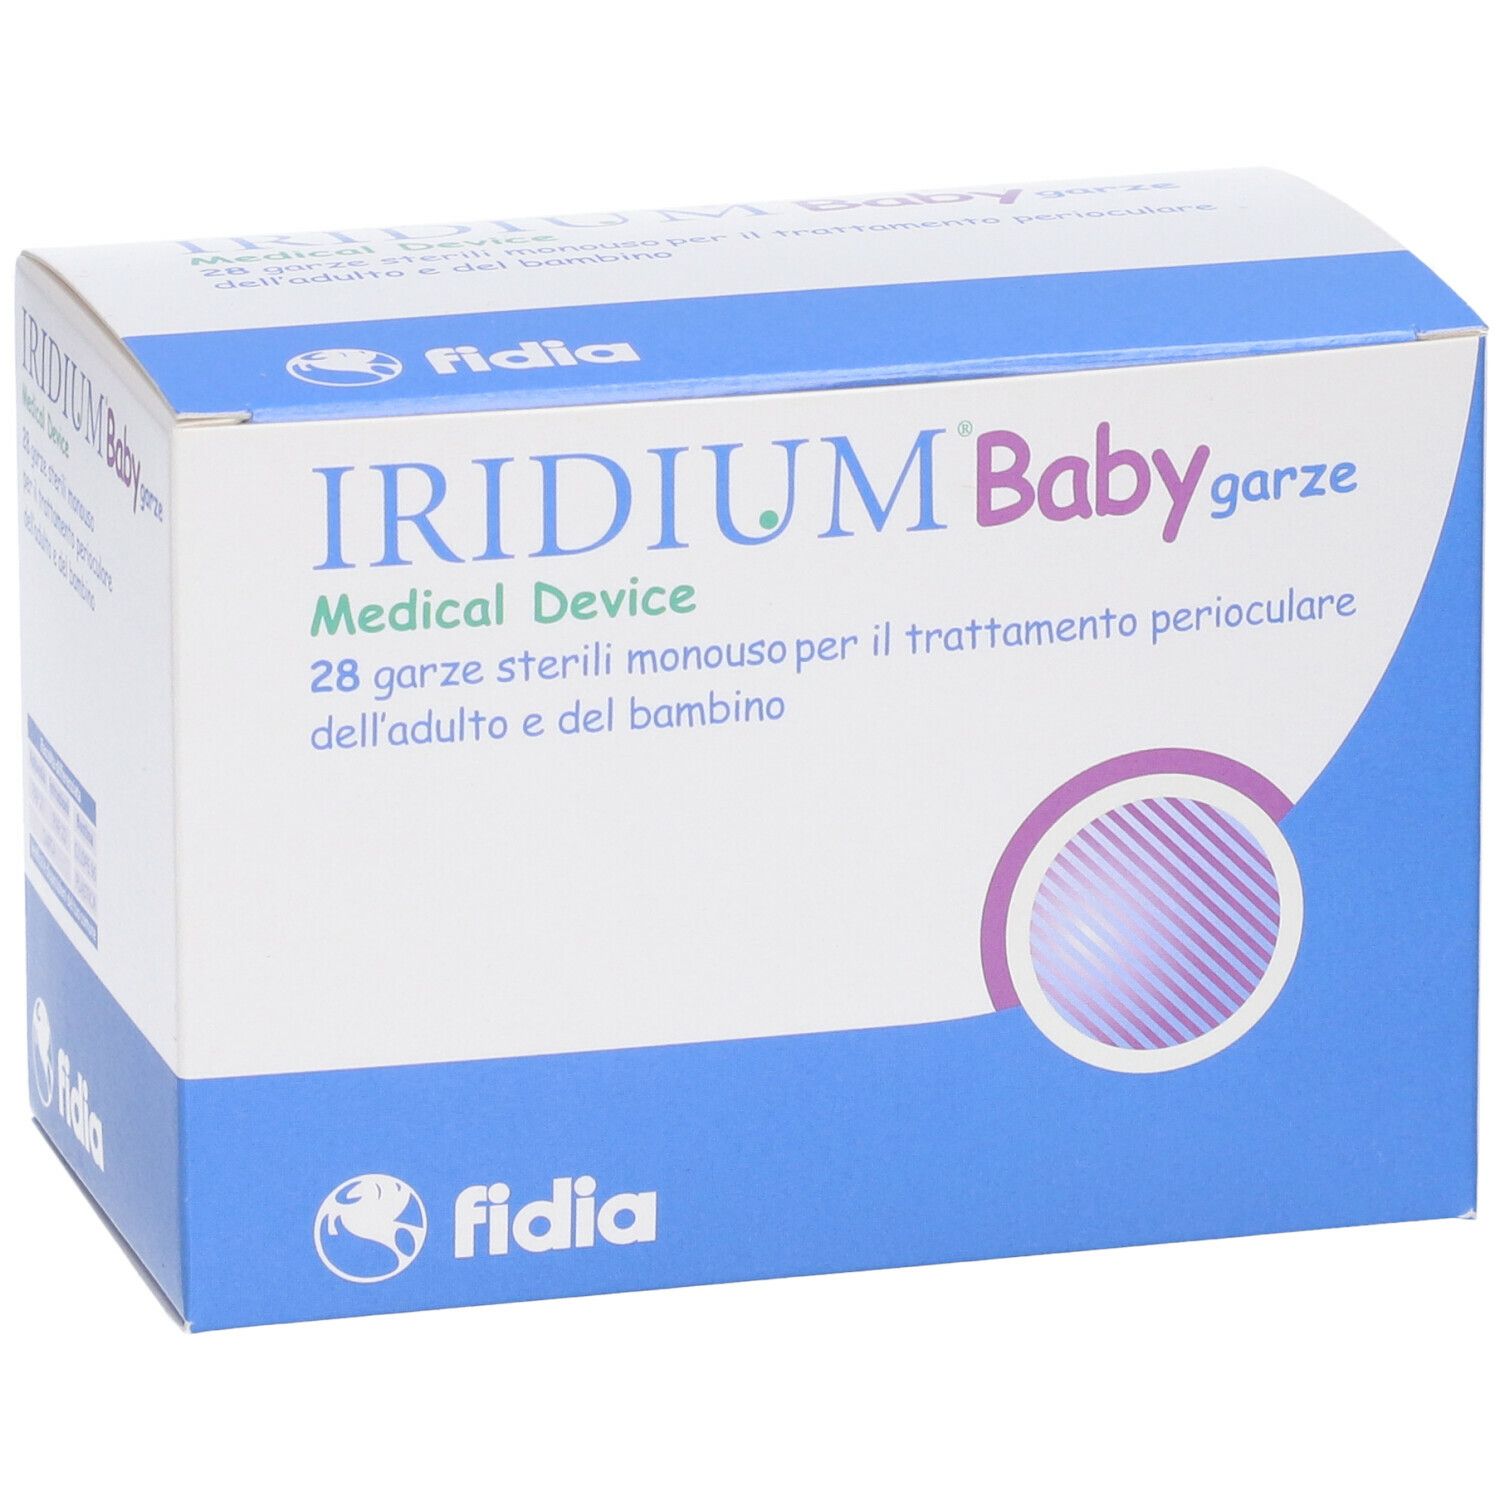 Iridium® Baby Garze Sterili Monouso